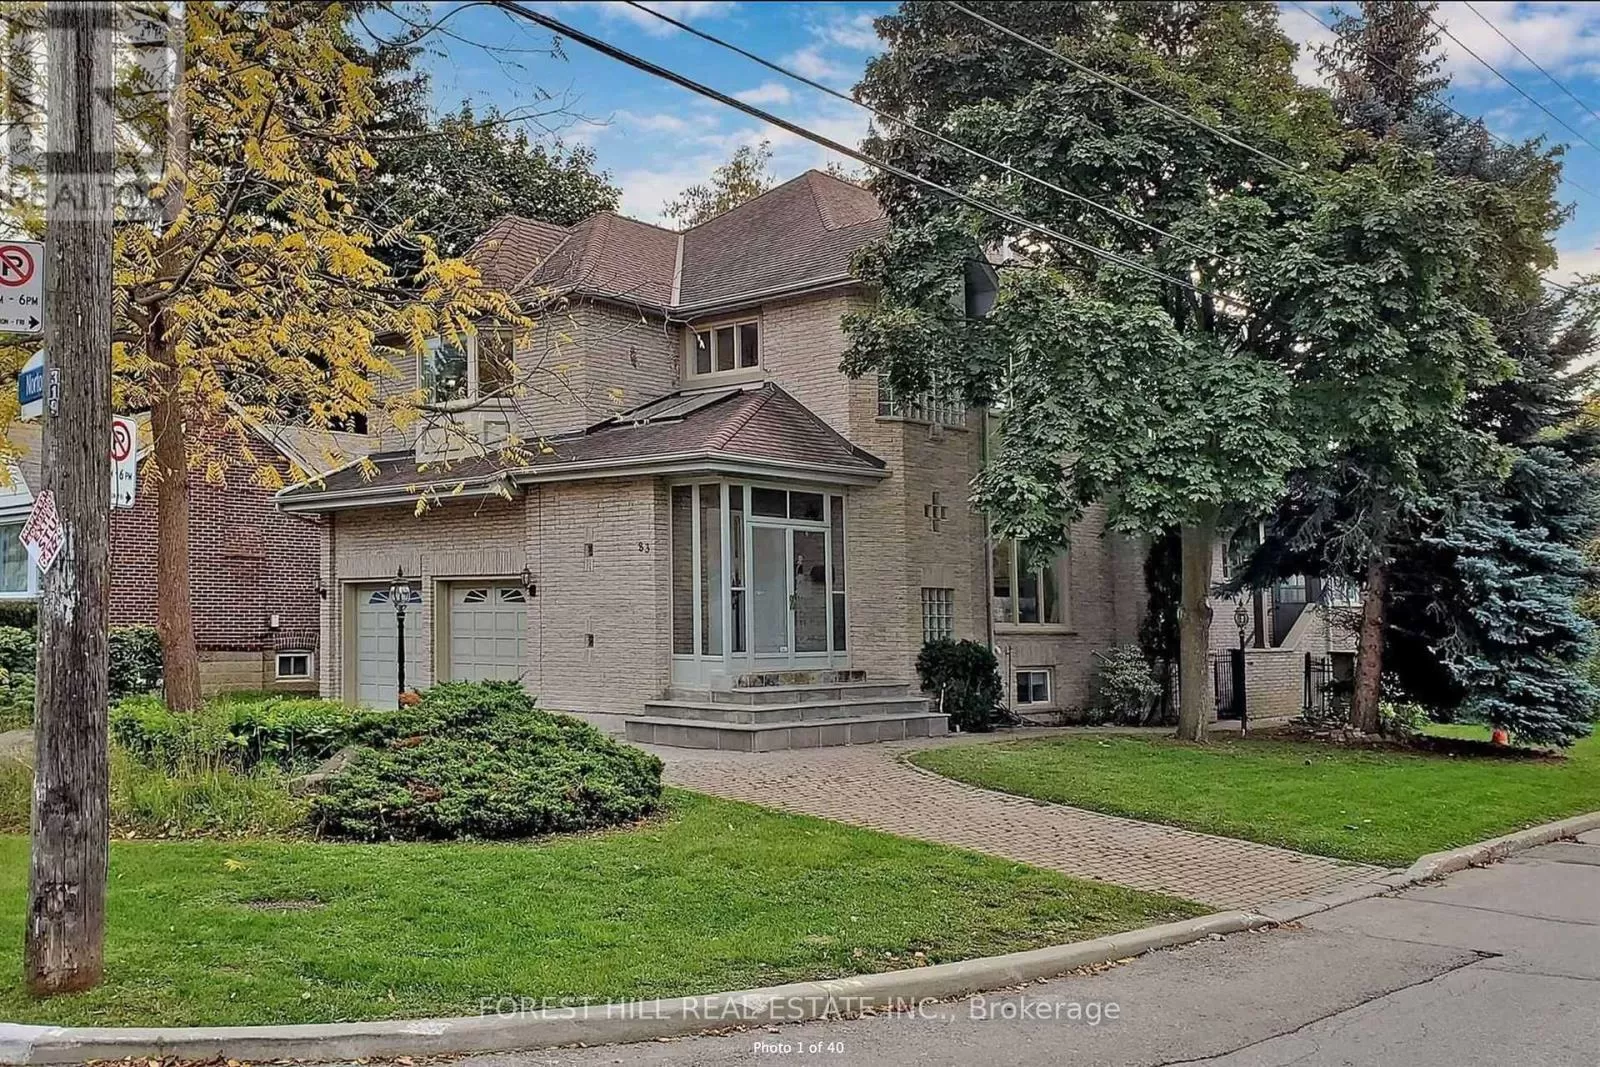 House for rent: 83 Norton Avenue, Toronto, Ontario M2N 4A4